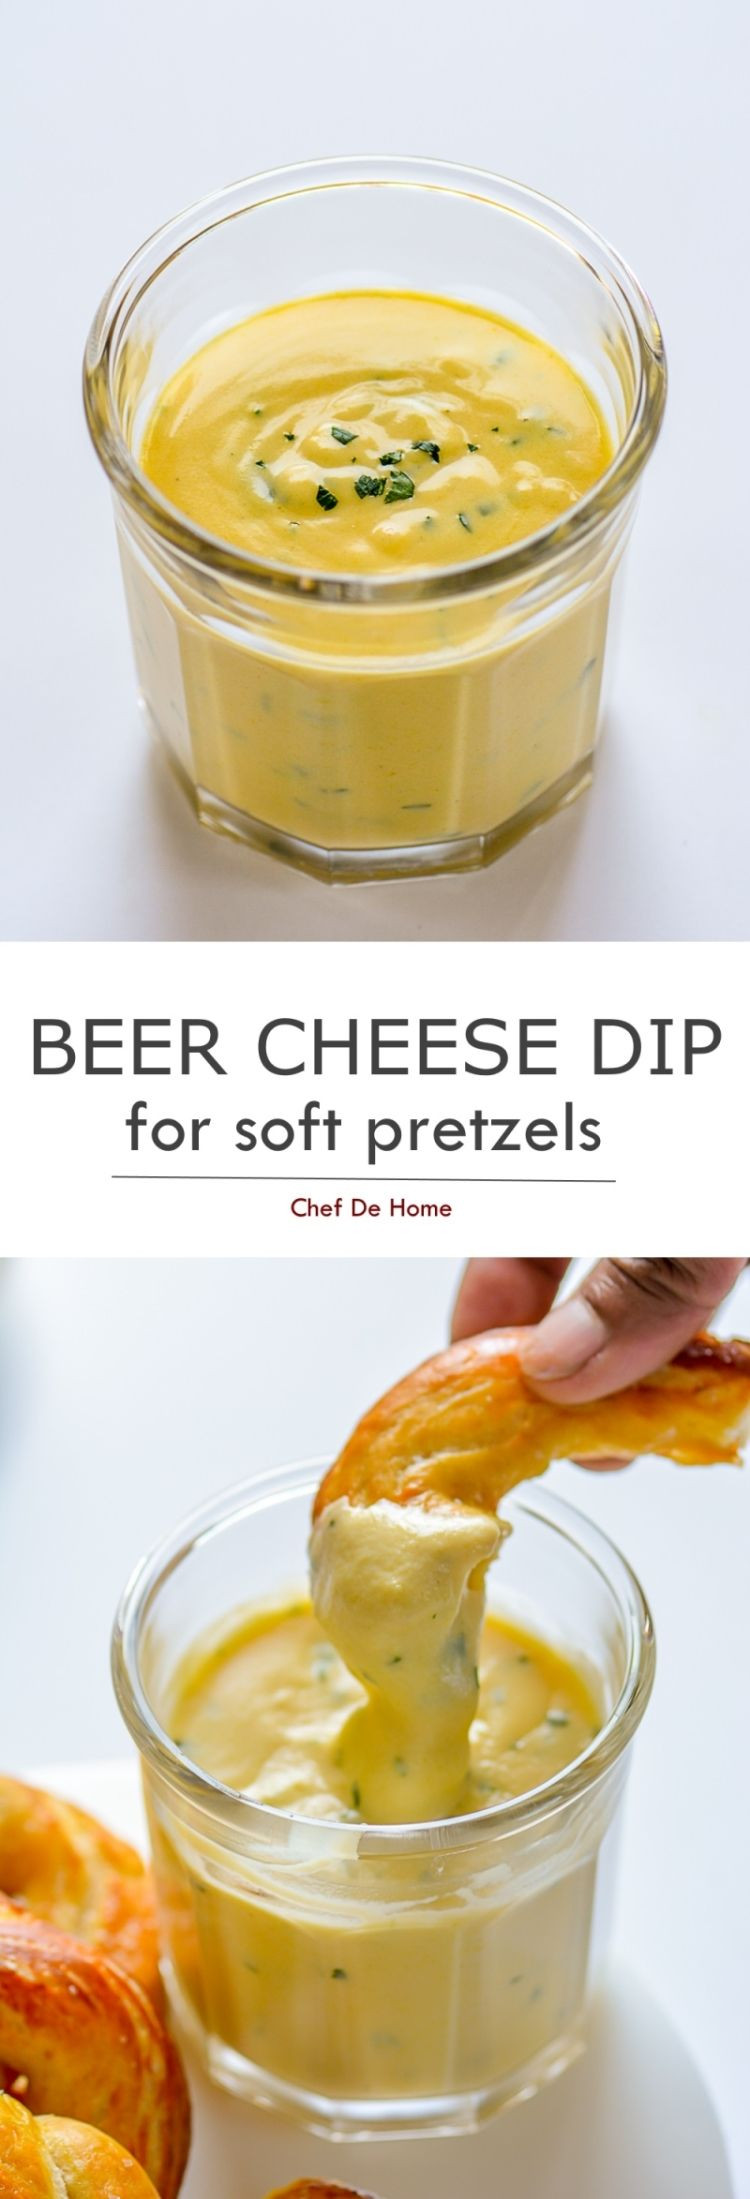 Best Beer Cheese Dip For Pretzels
 Beer Cheese Dip for Pretzels Recipe